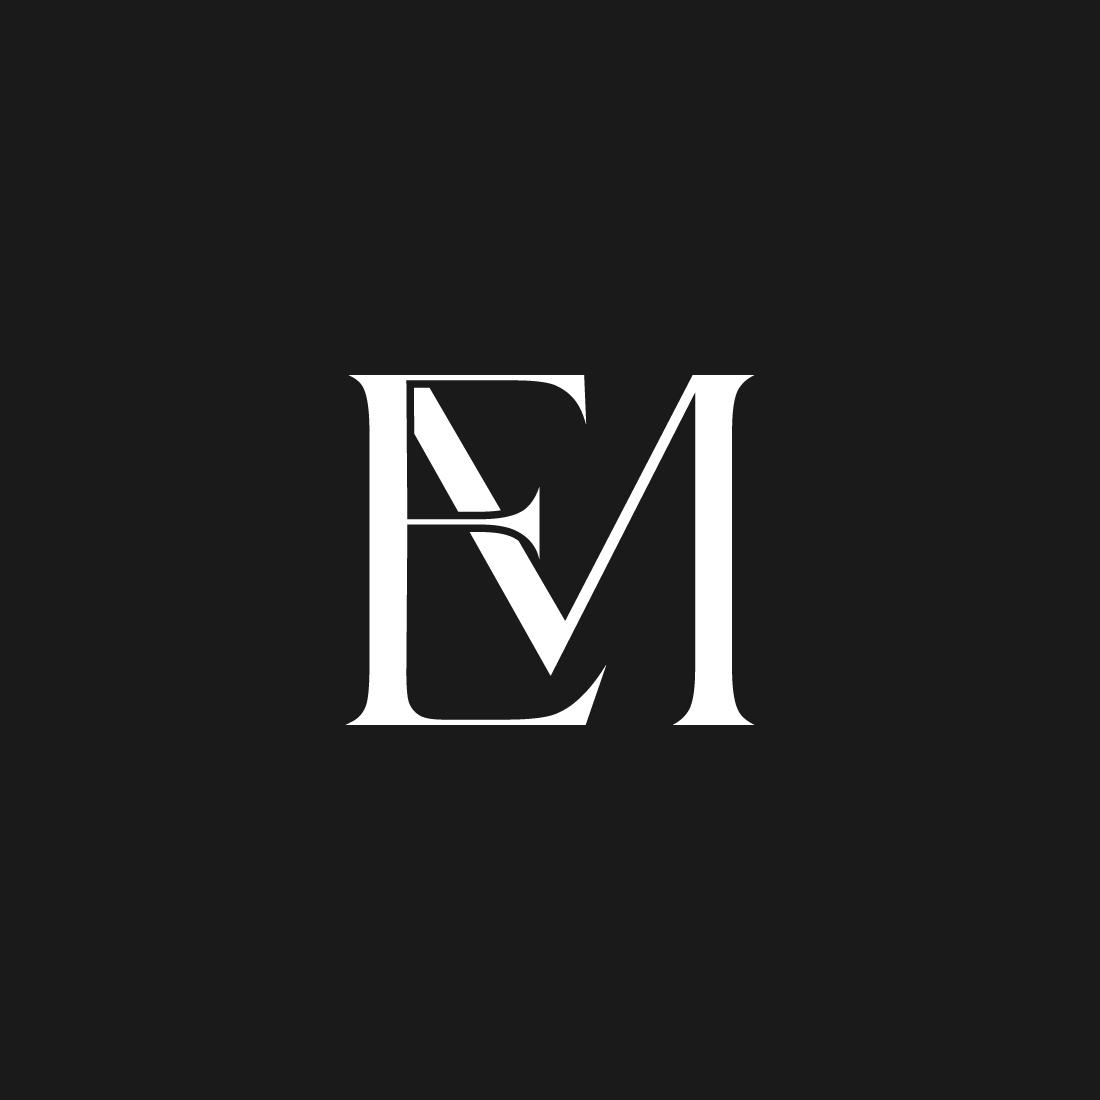 E & m / em logo initial vector mark. initial letter e & m em posters for  the wall • posters m, wedding, vector | myloview.com